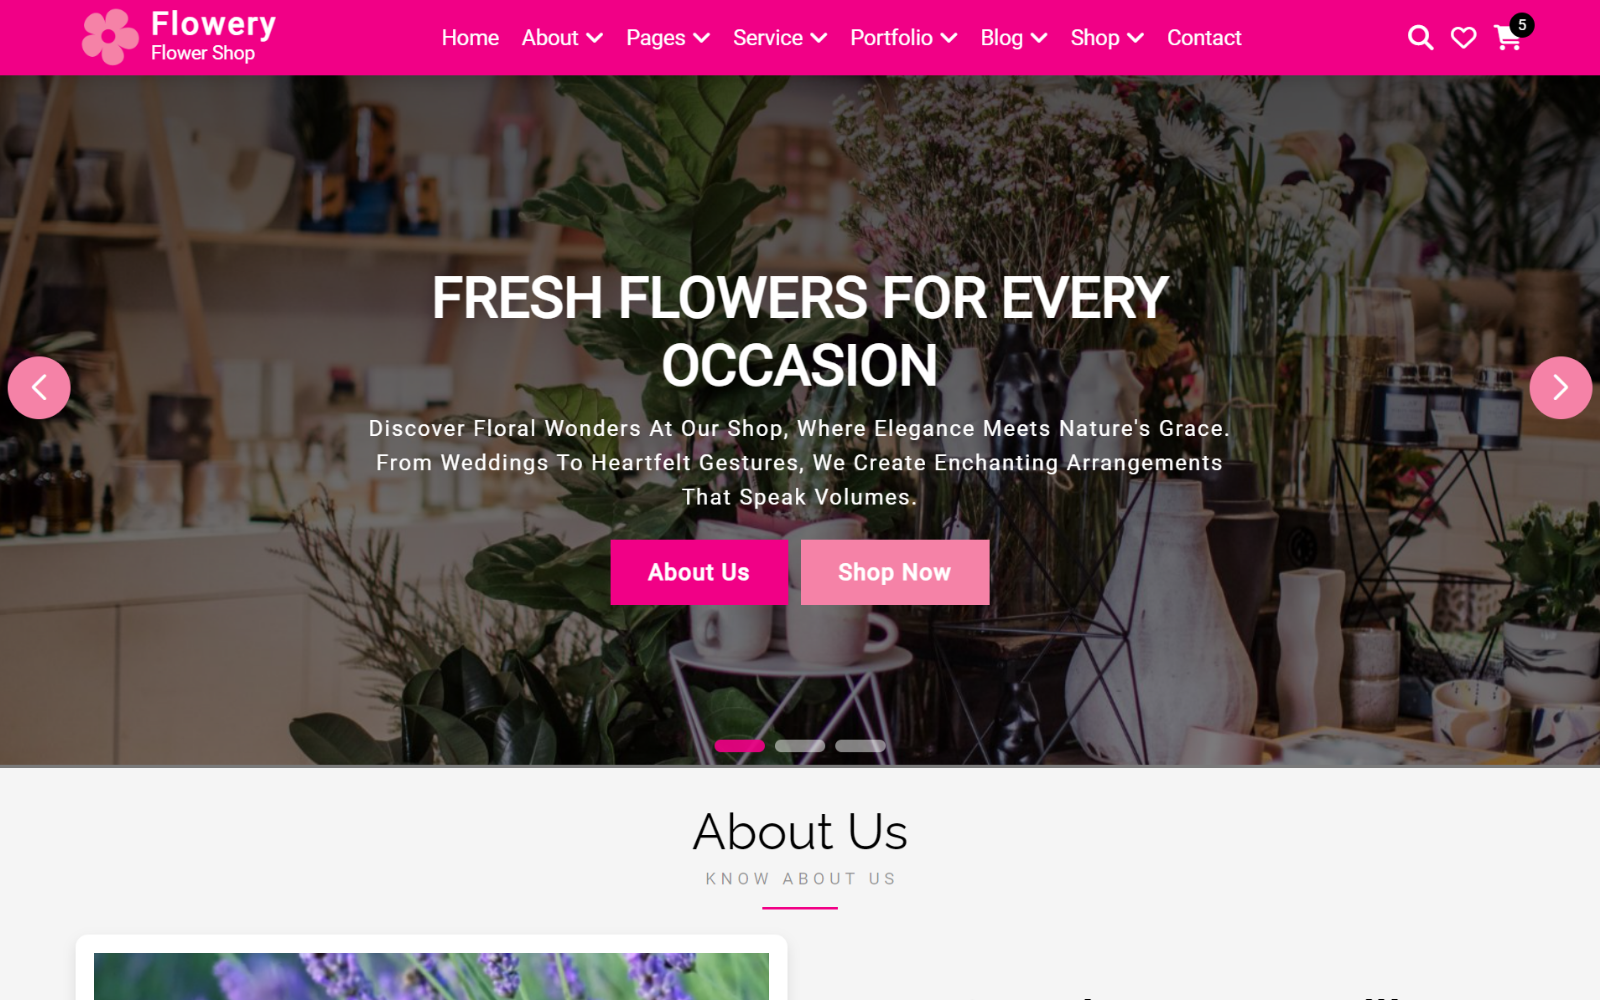 Flowery - Flower Store HTML5 Website Template